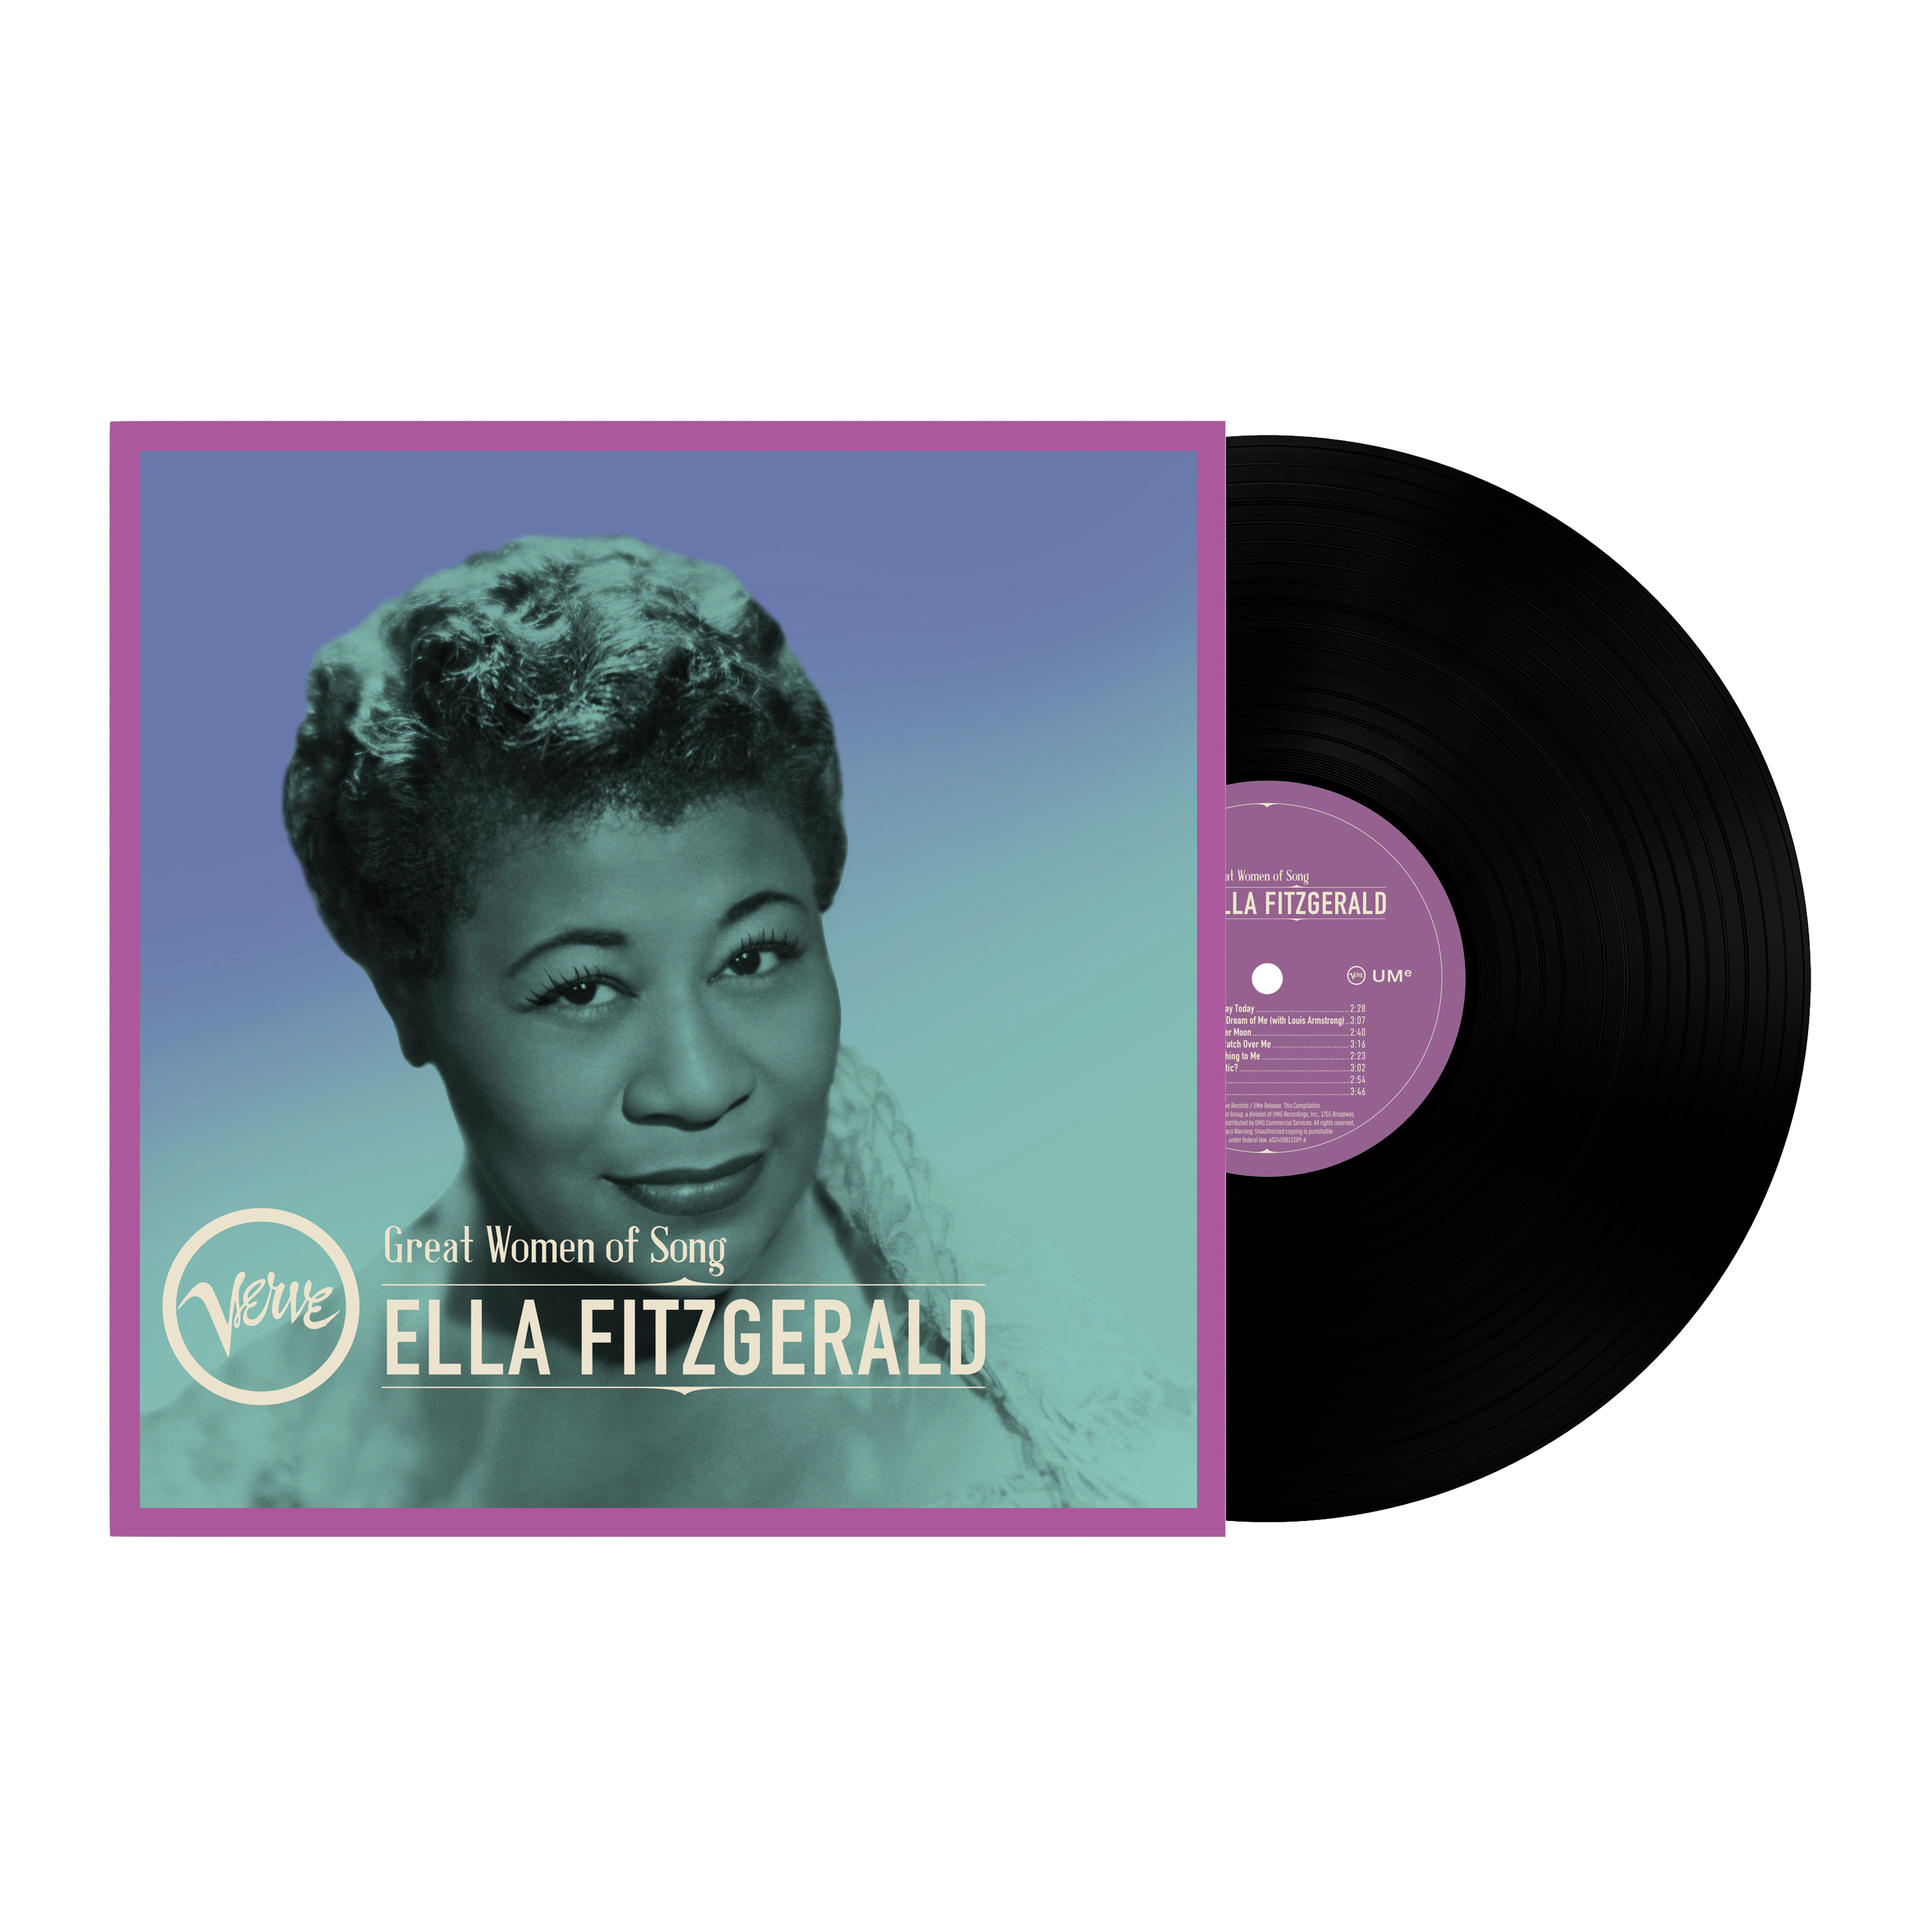 Ella Fitzgerald - Great Women - of Song (Vinyl)